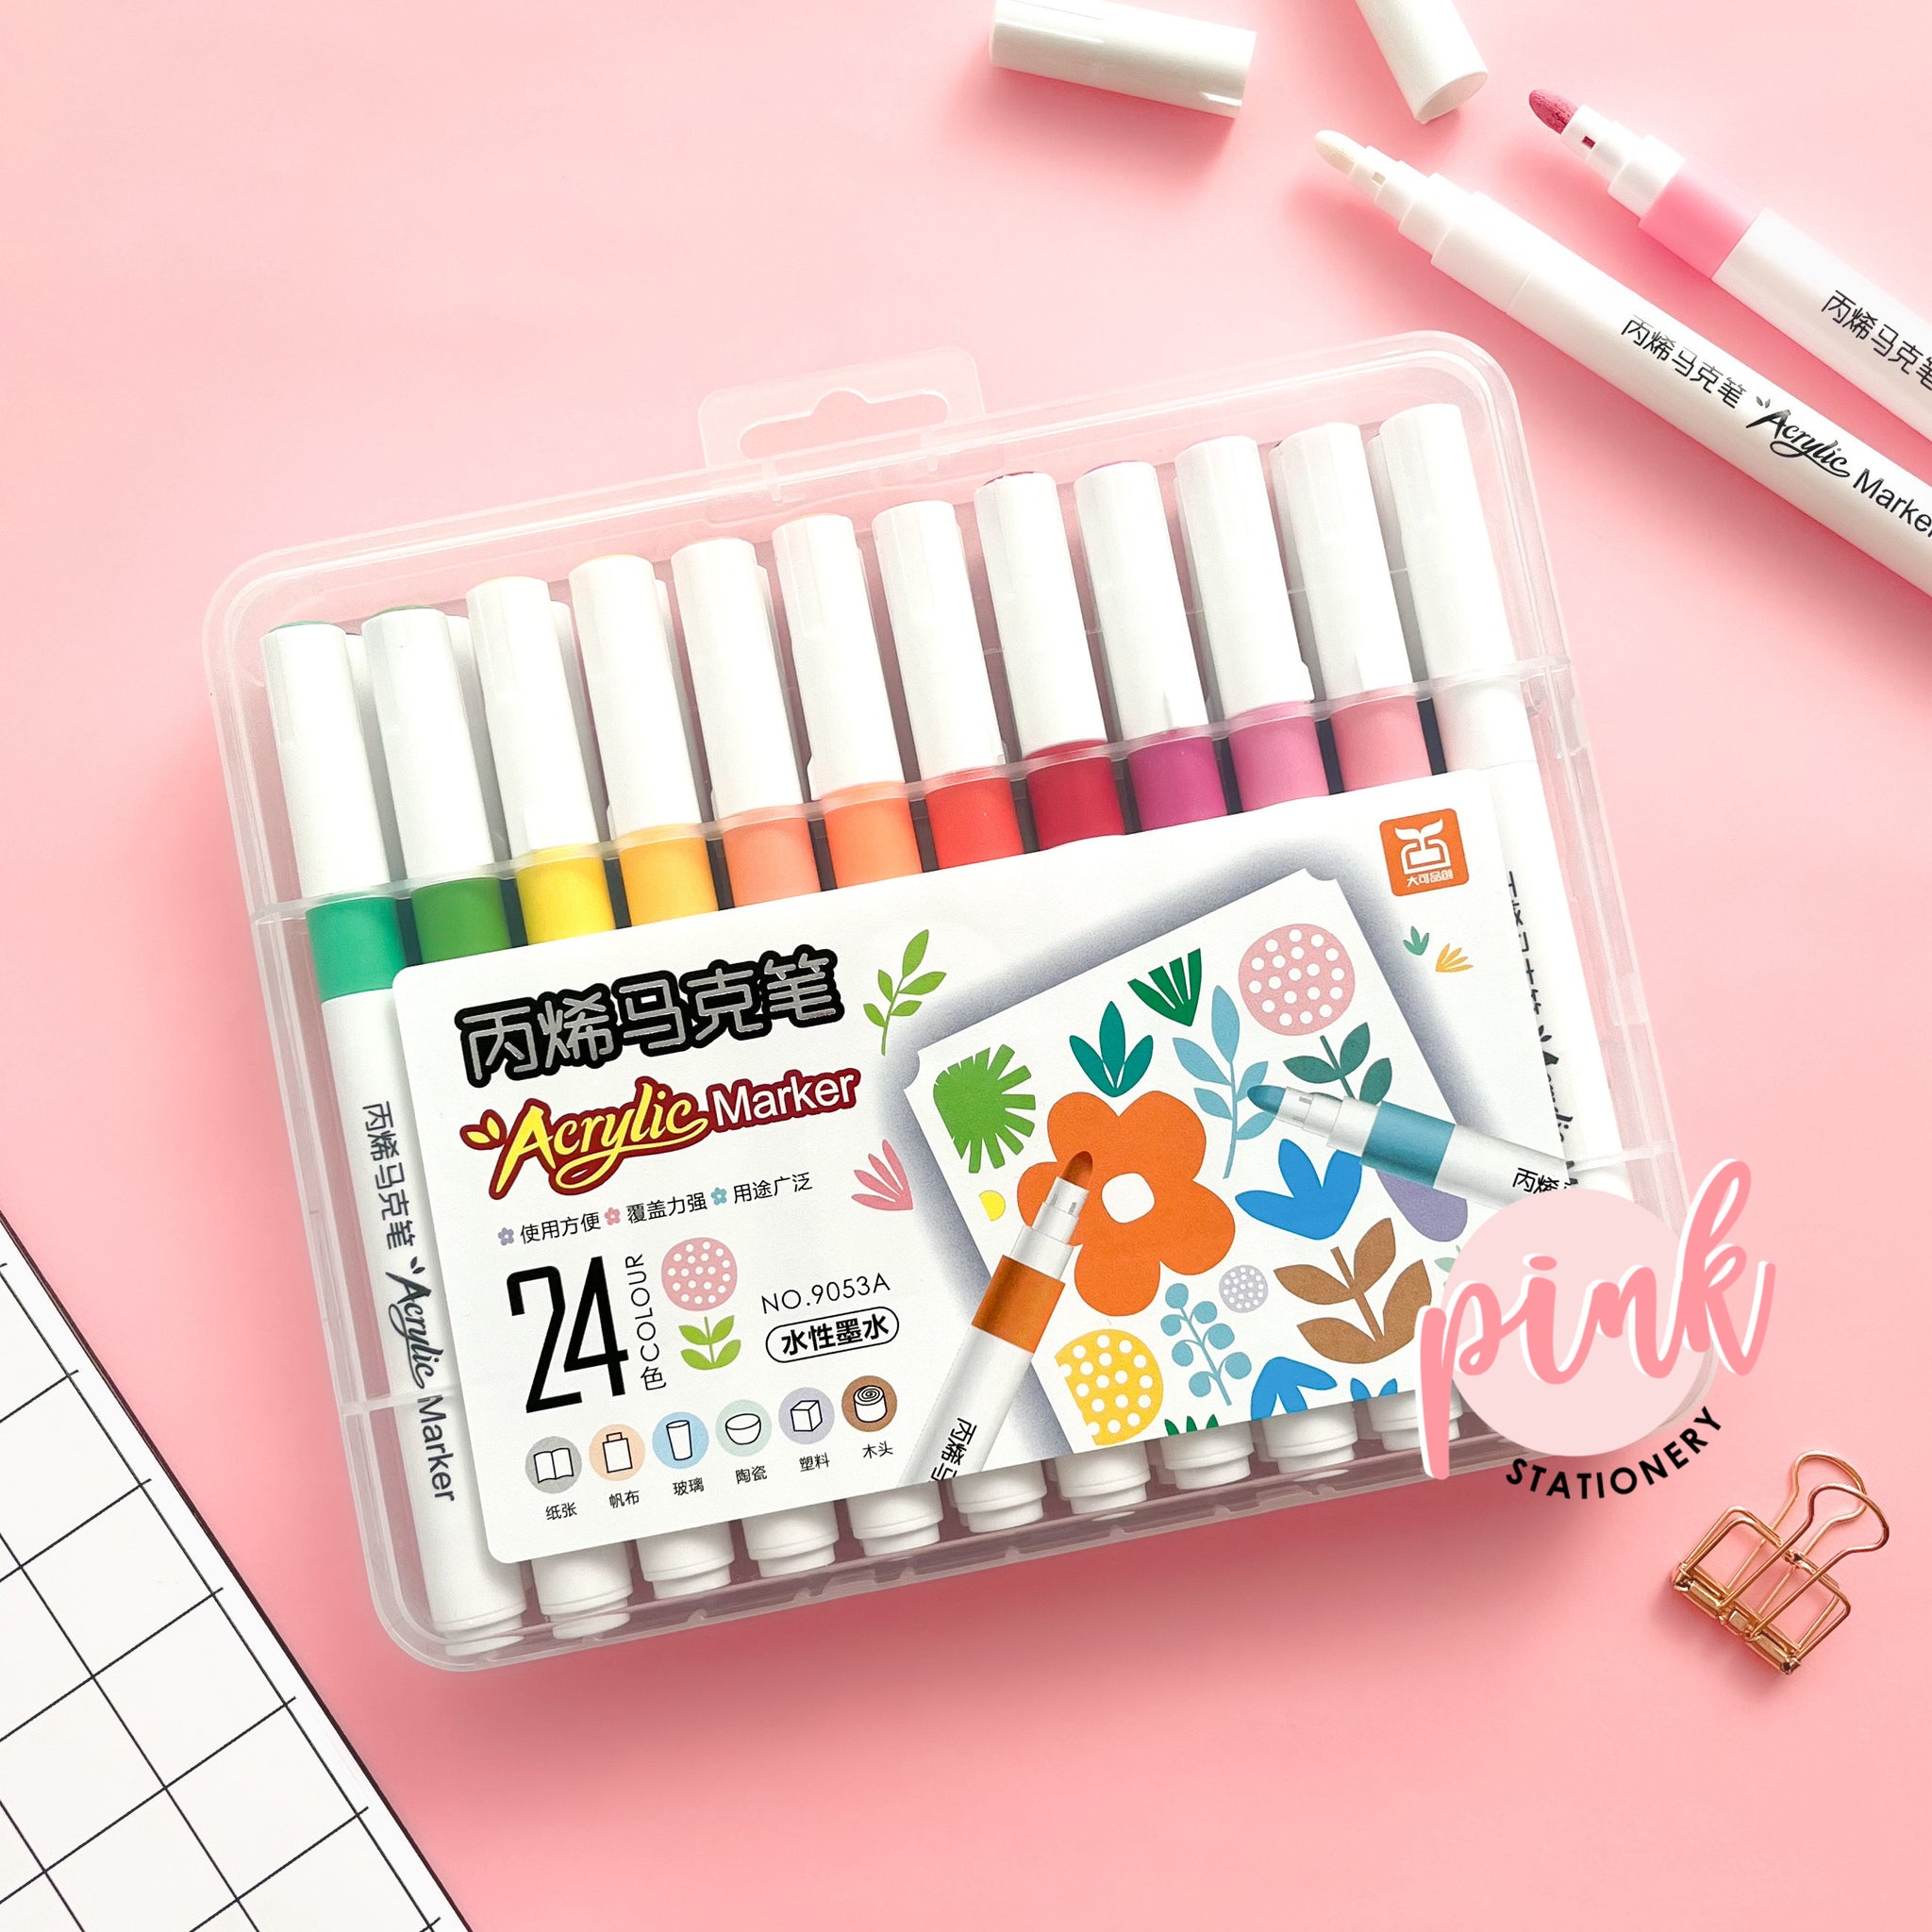 Plumones “Acrylic Marker” 24 piezas – Pink Stationery